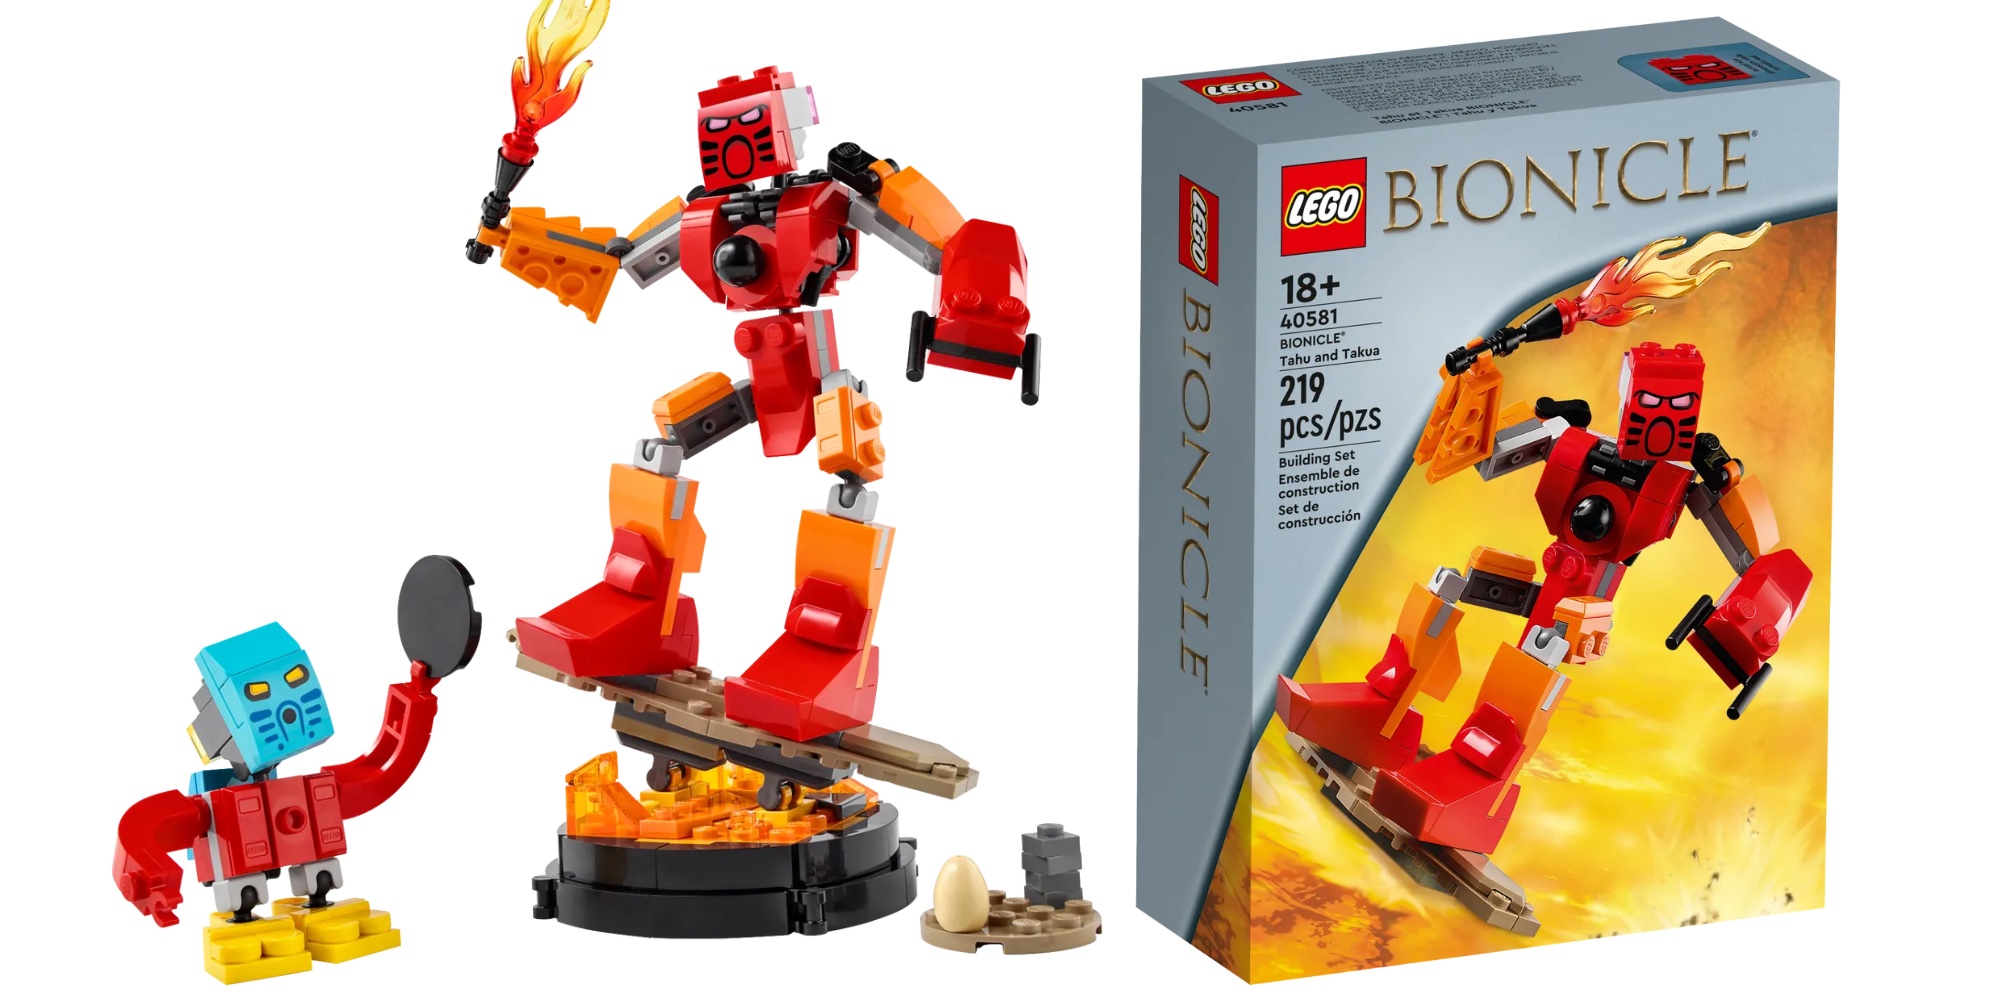 LEGO BIONICLE Tahu and Takua Gift With Purchase revealed!